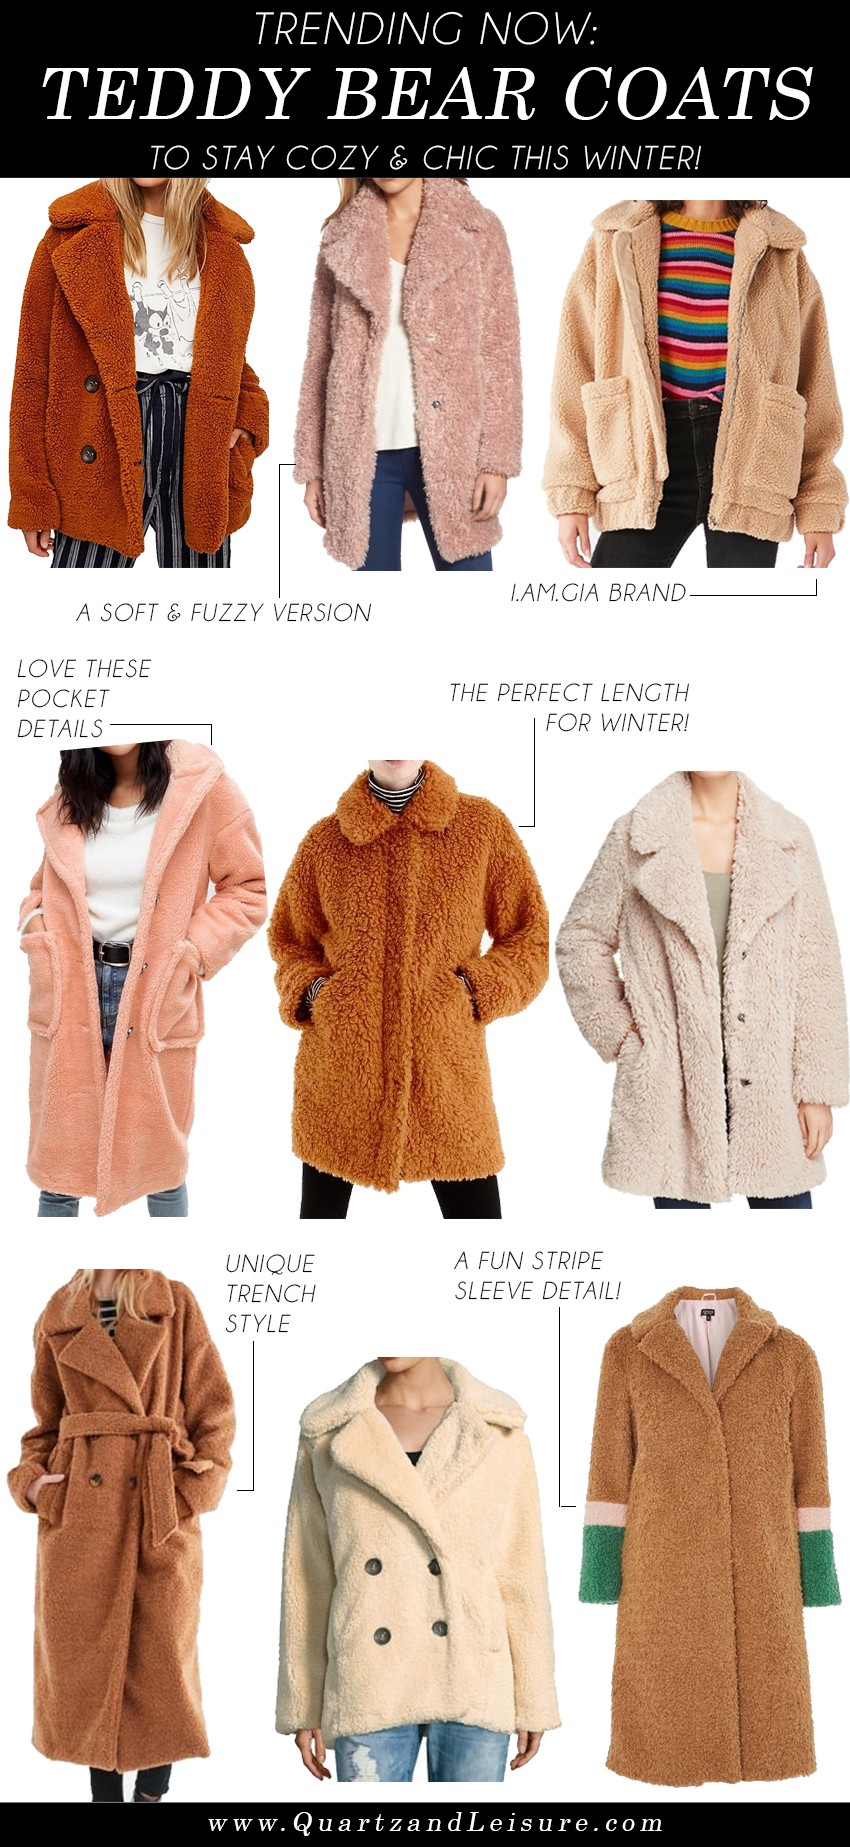 Teddy Bear Coats, Teddy Coat, Teddy Bear Jacket Urban Outfitters, Free People